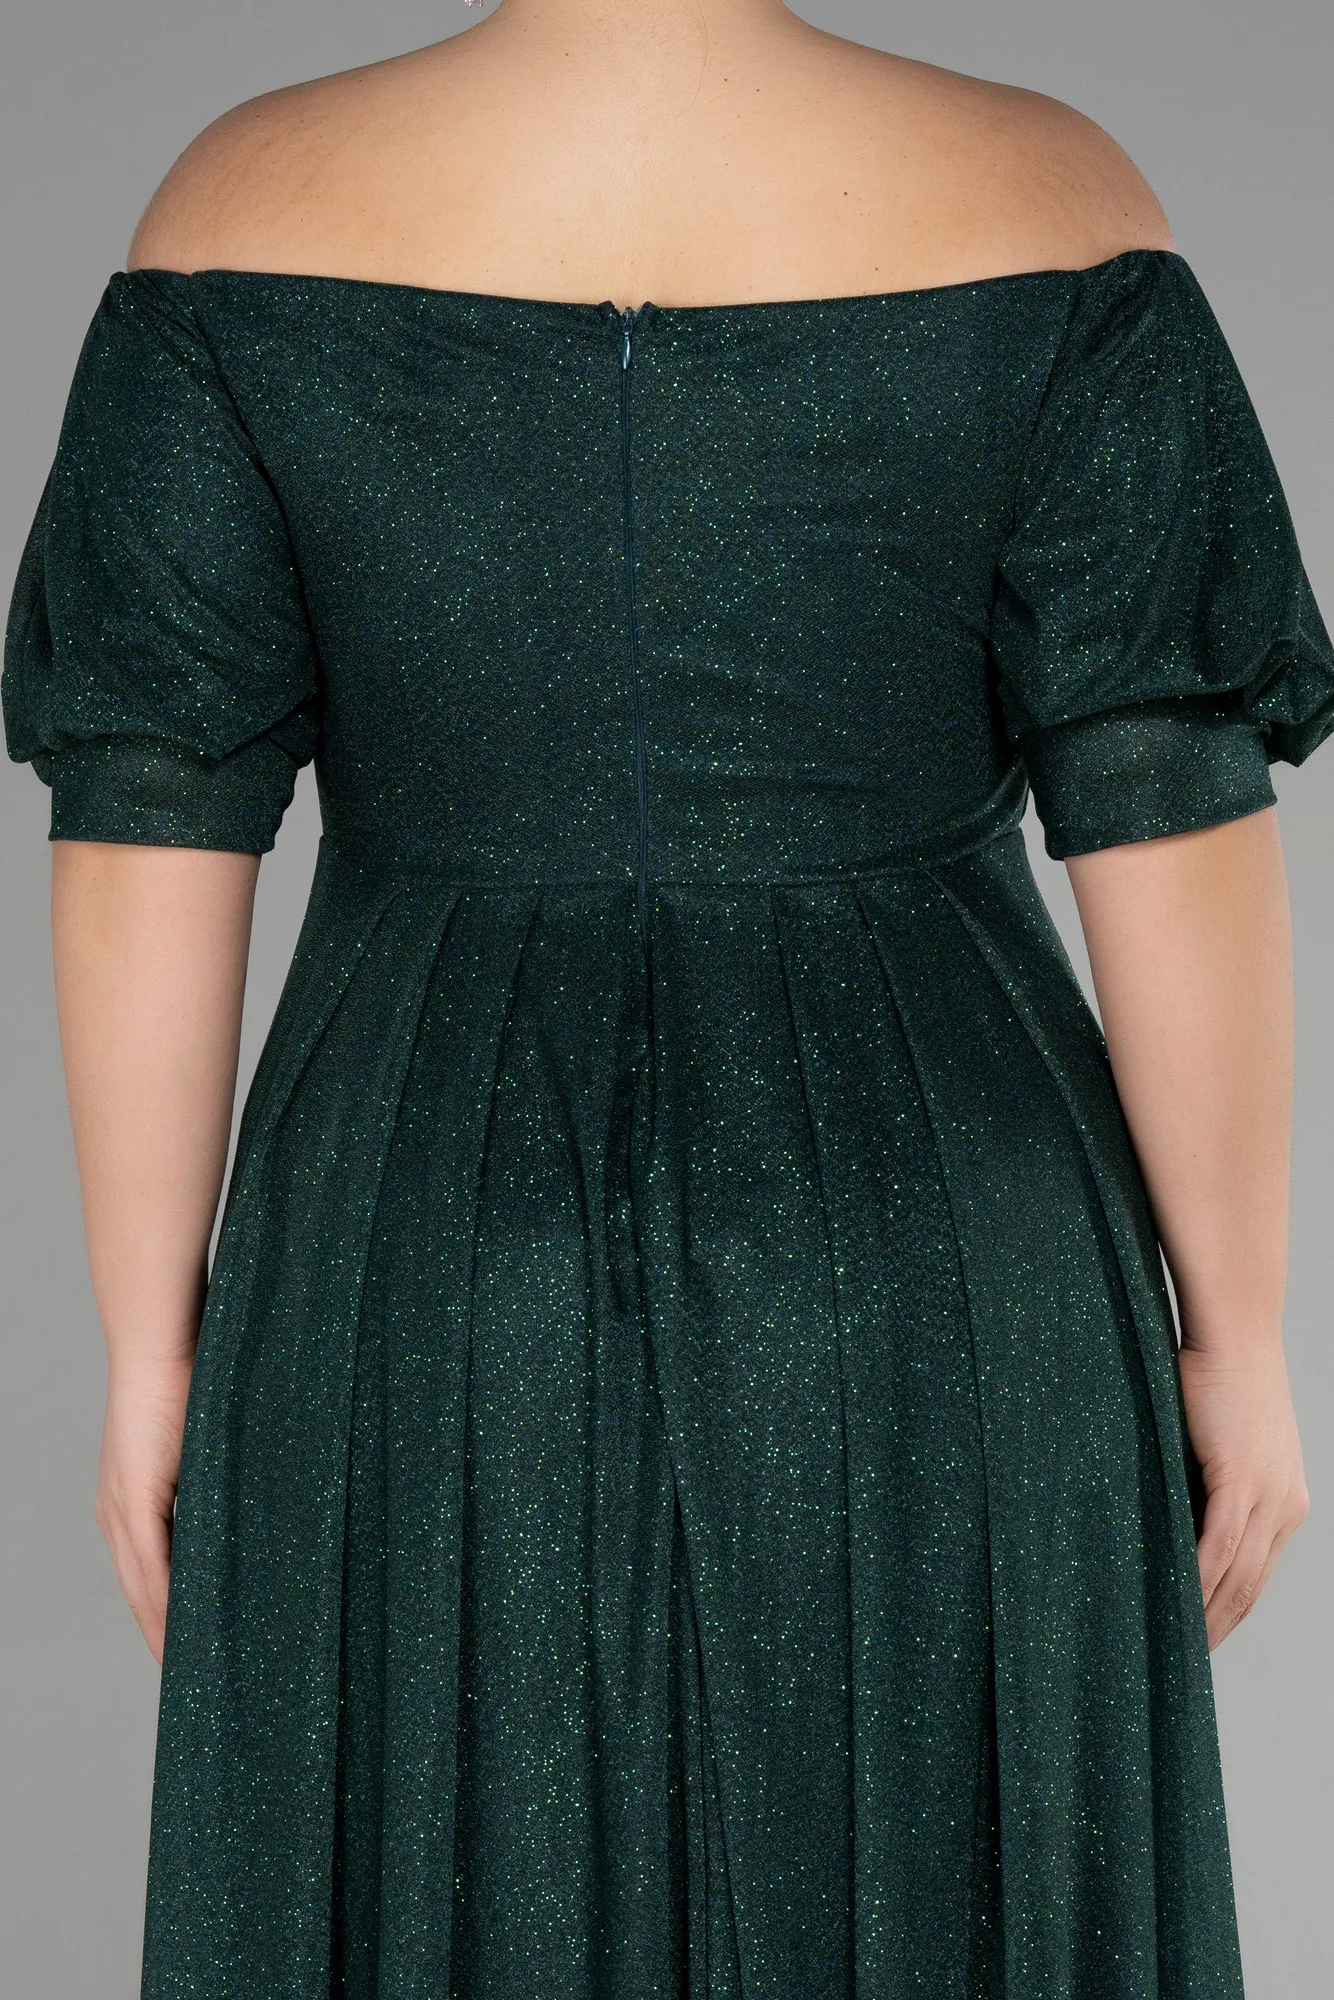 Emerald Green-Long Plus Size Evening Dress ABU3615